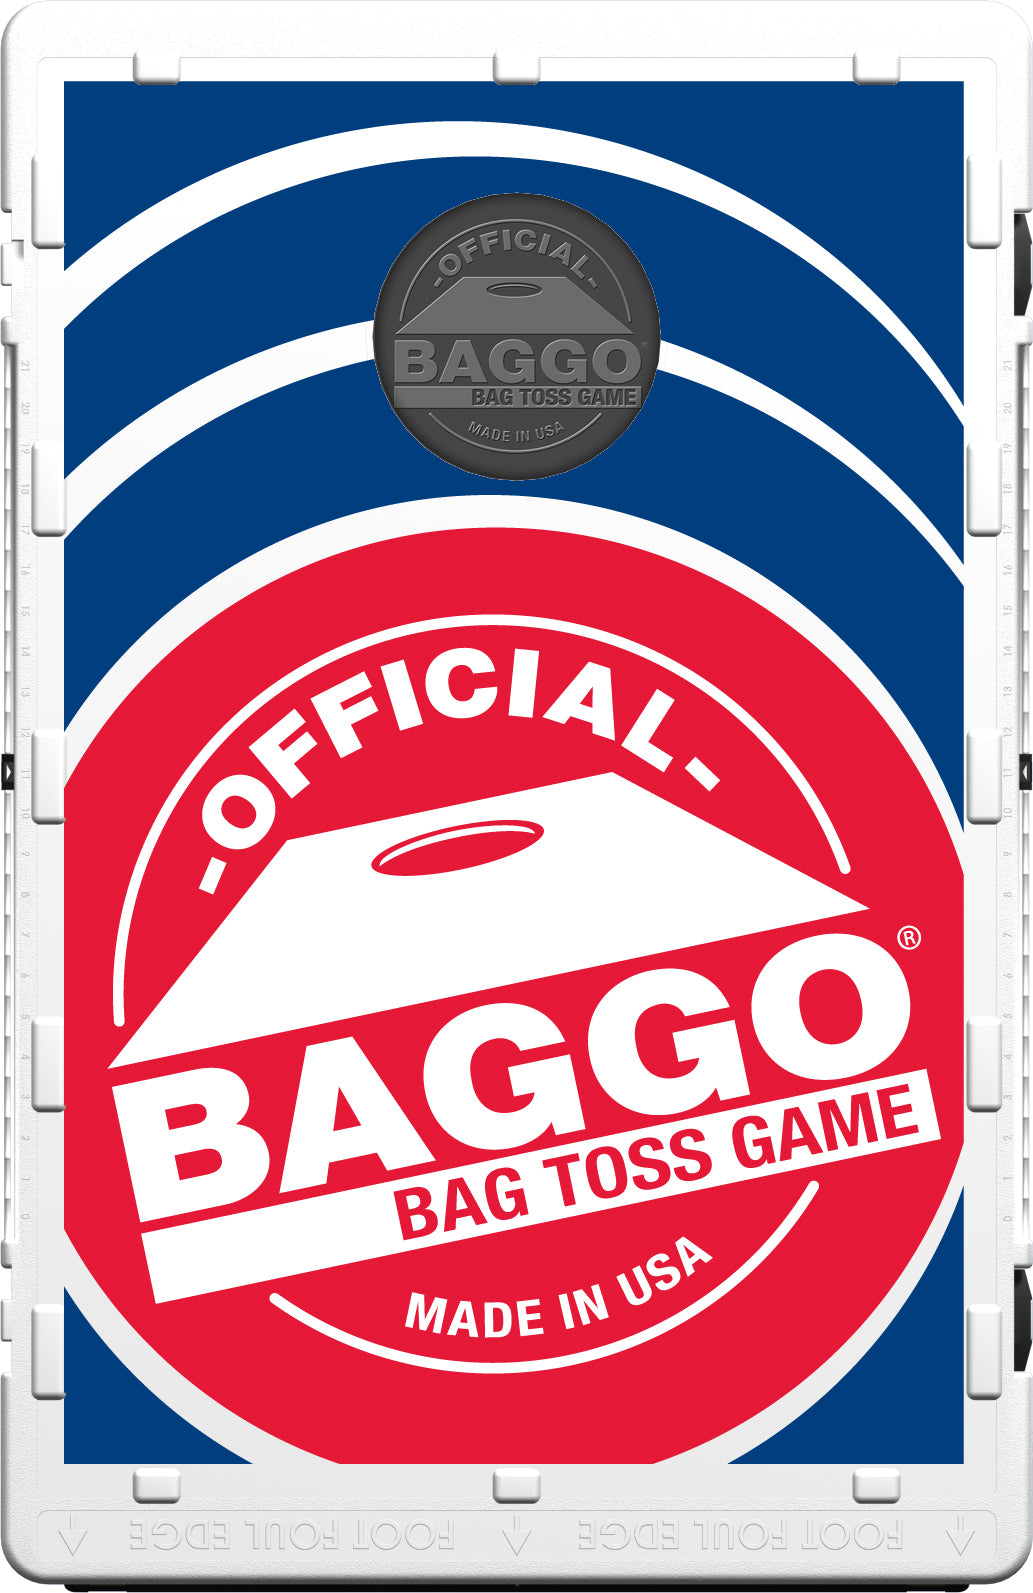 Portable bag toss and regulation wood cornhole games from Baggo – Baggo Inc